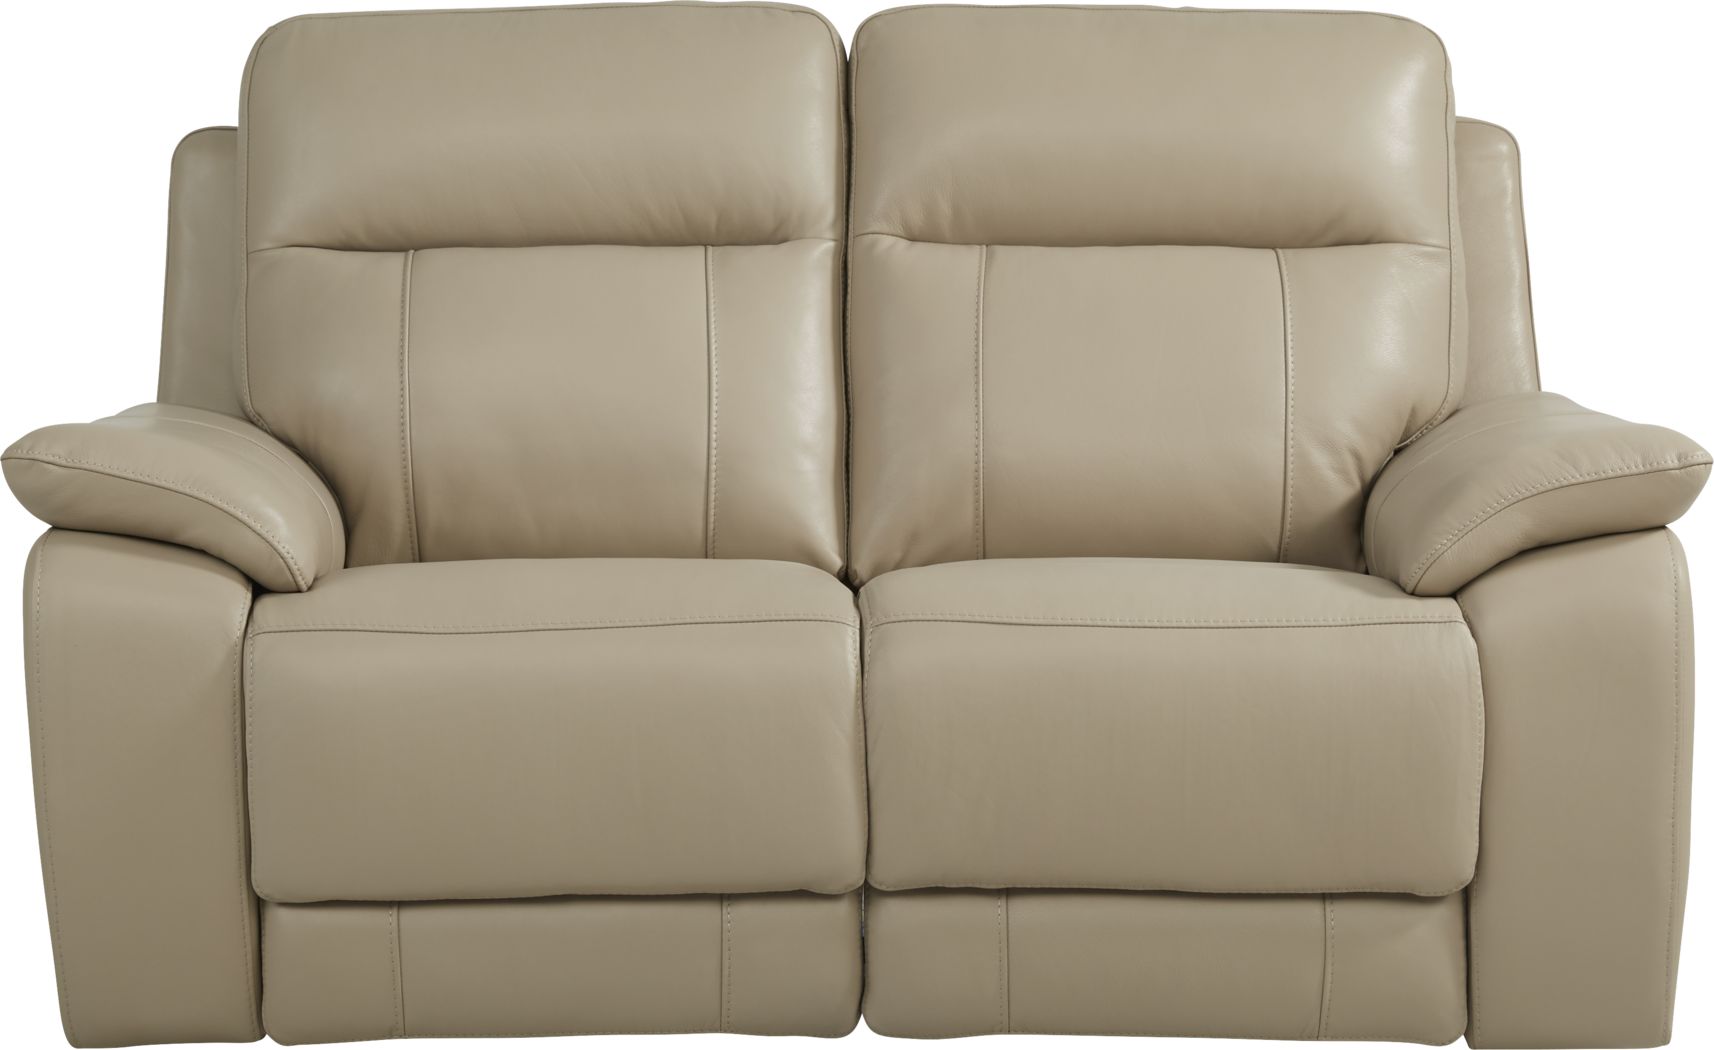 torini cream leather power reclining sofa